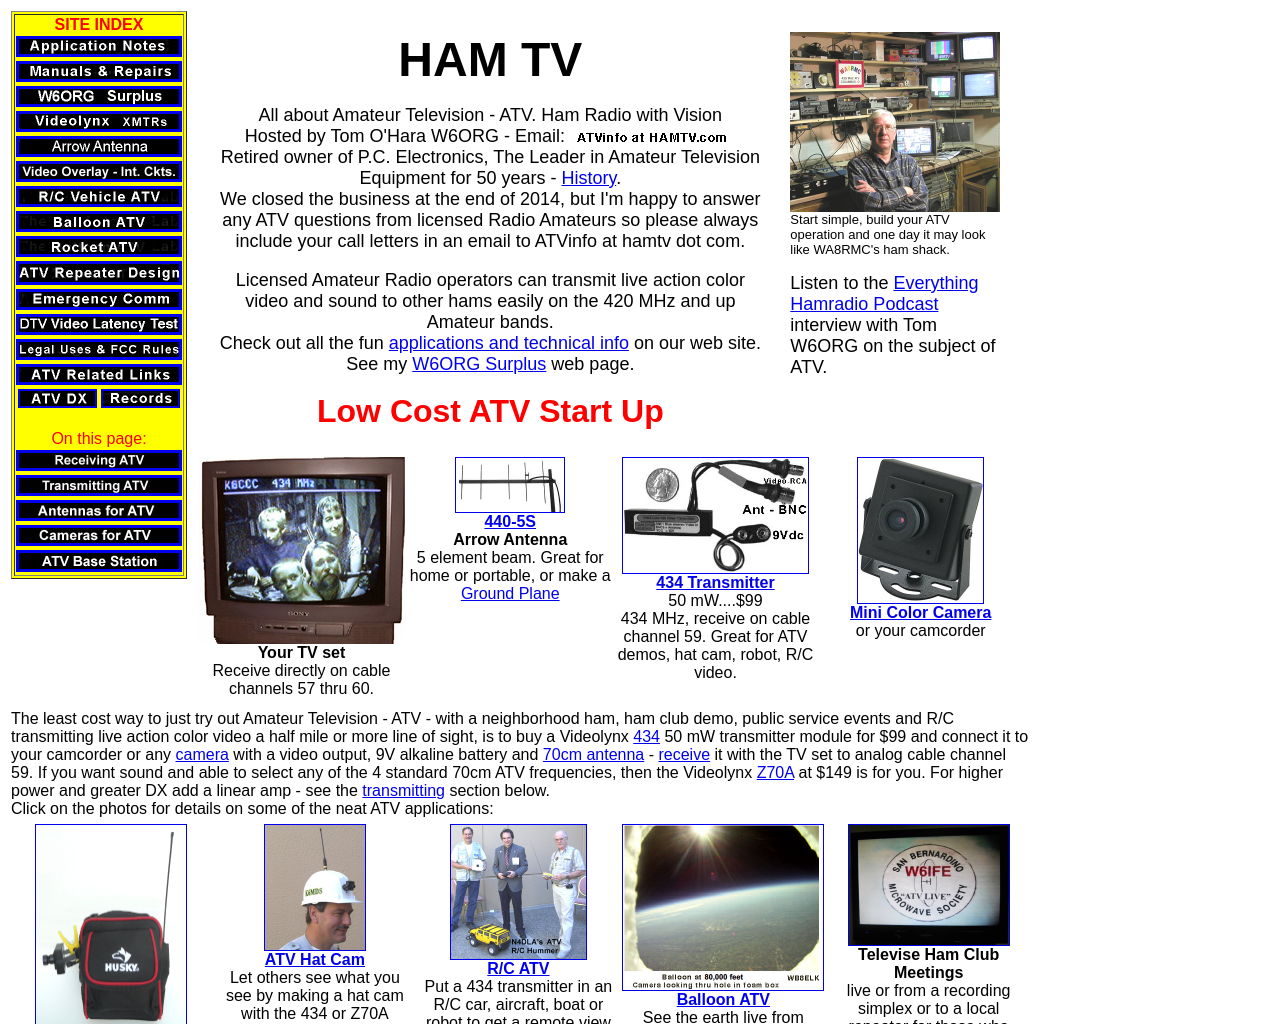 hamtv.com